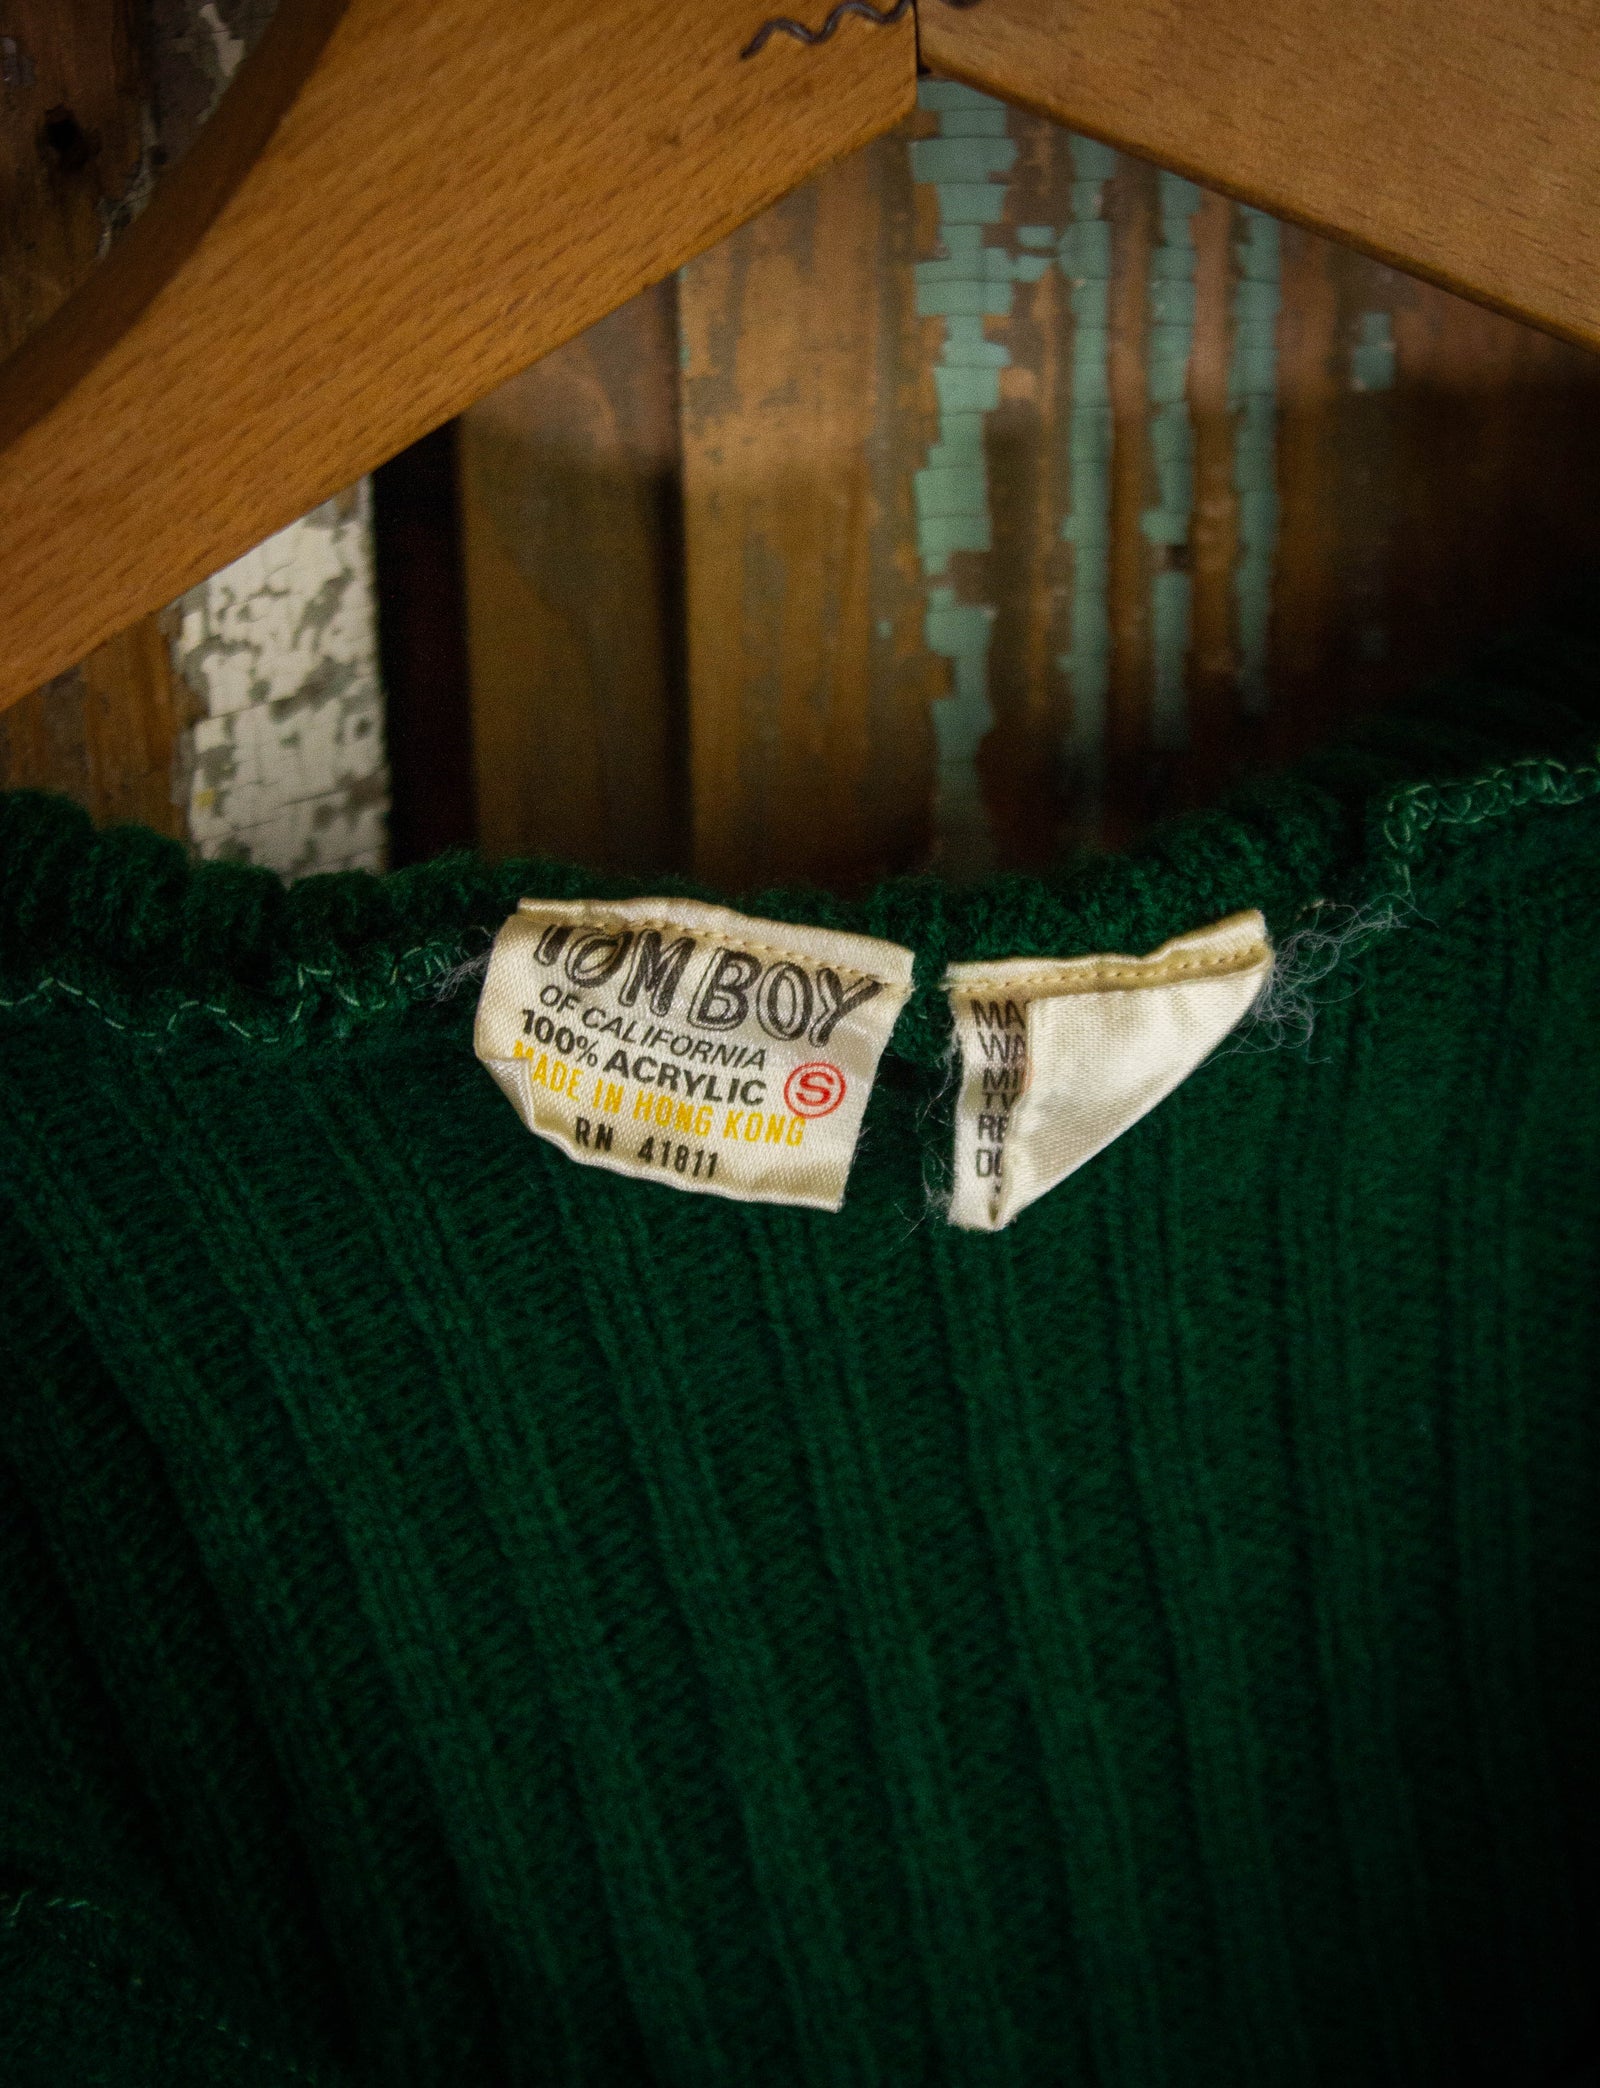 Vintage Tom Boy Knit Cardigan With Hood 70s Green XS